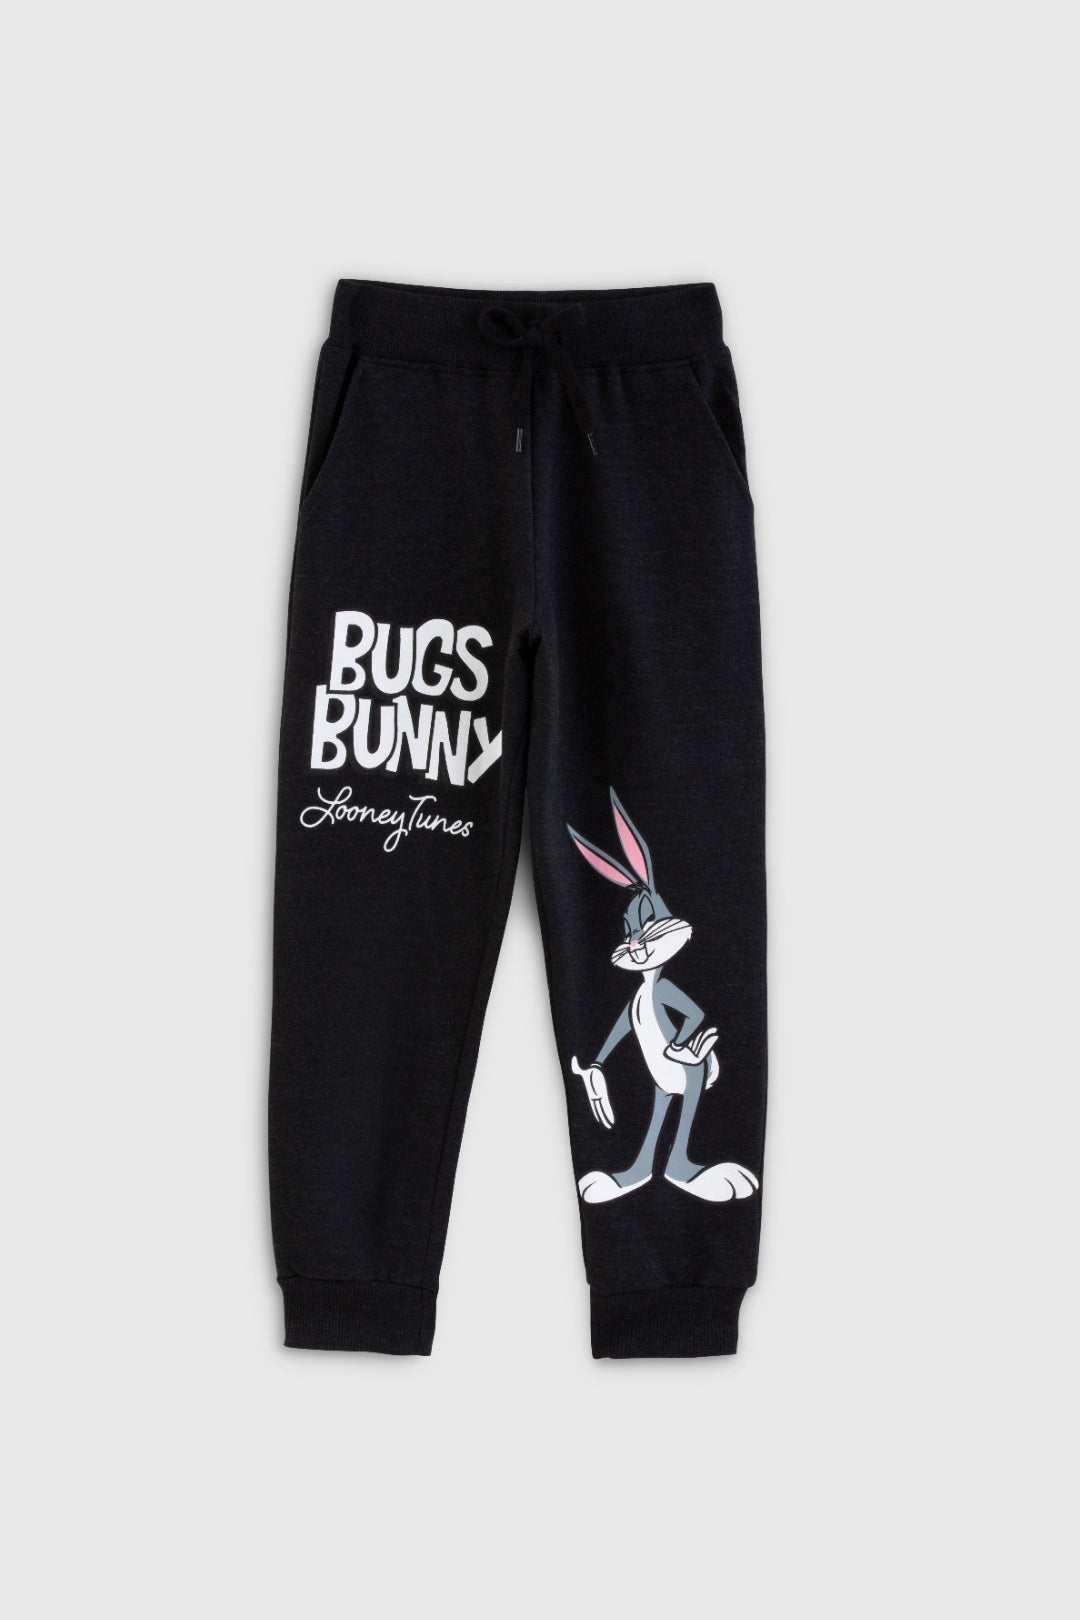 Bugs Bunny Classic Jogger